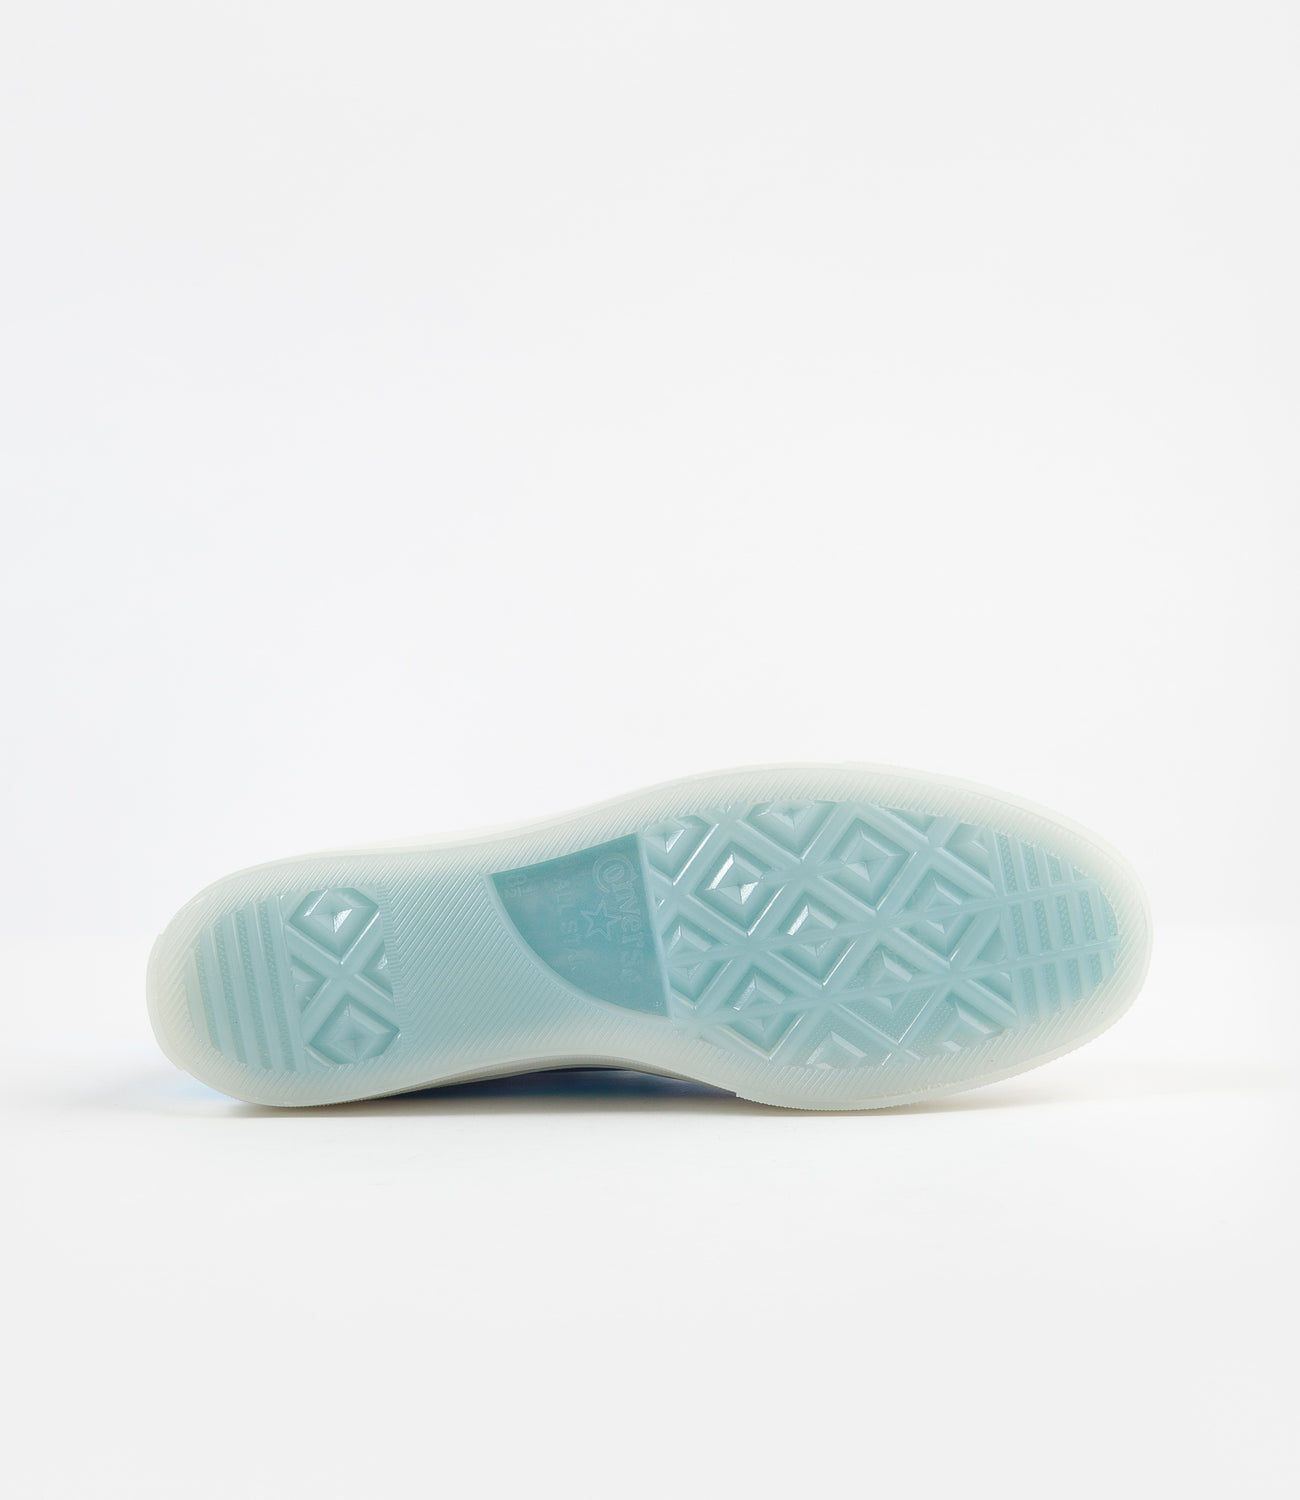 Converse CTAS 70's Hi Shoes - White / Iridescent / White | Flatspot